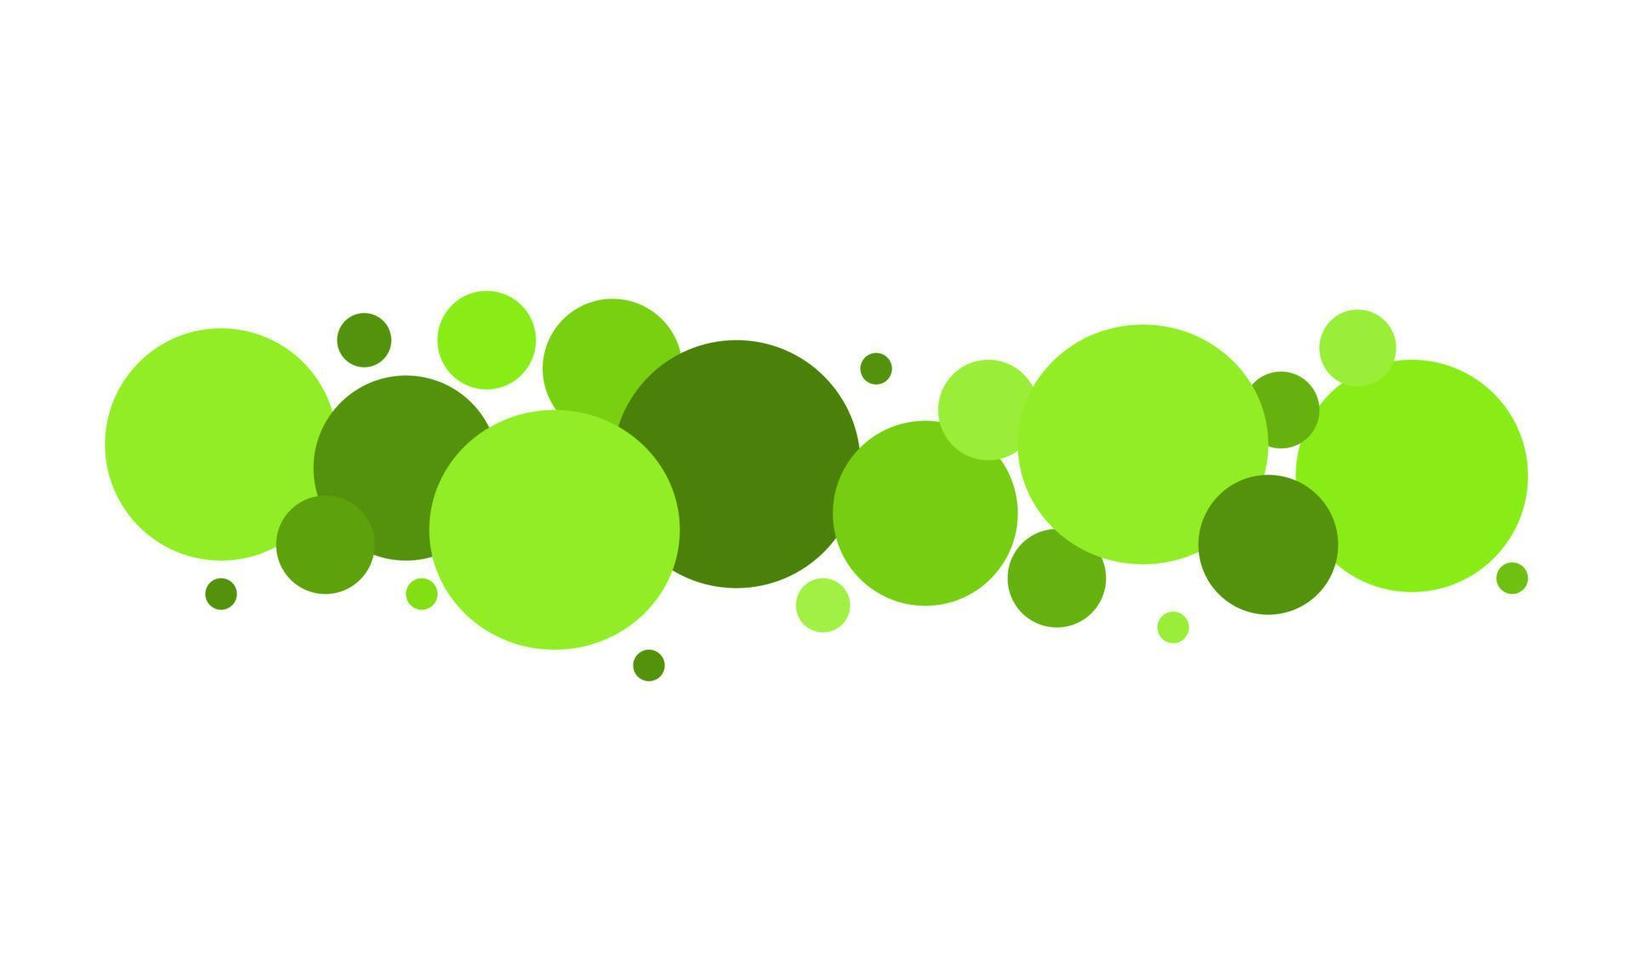 grüner abstrakter punkthintergrund. Vektor-Illustration. vektor